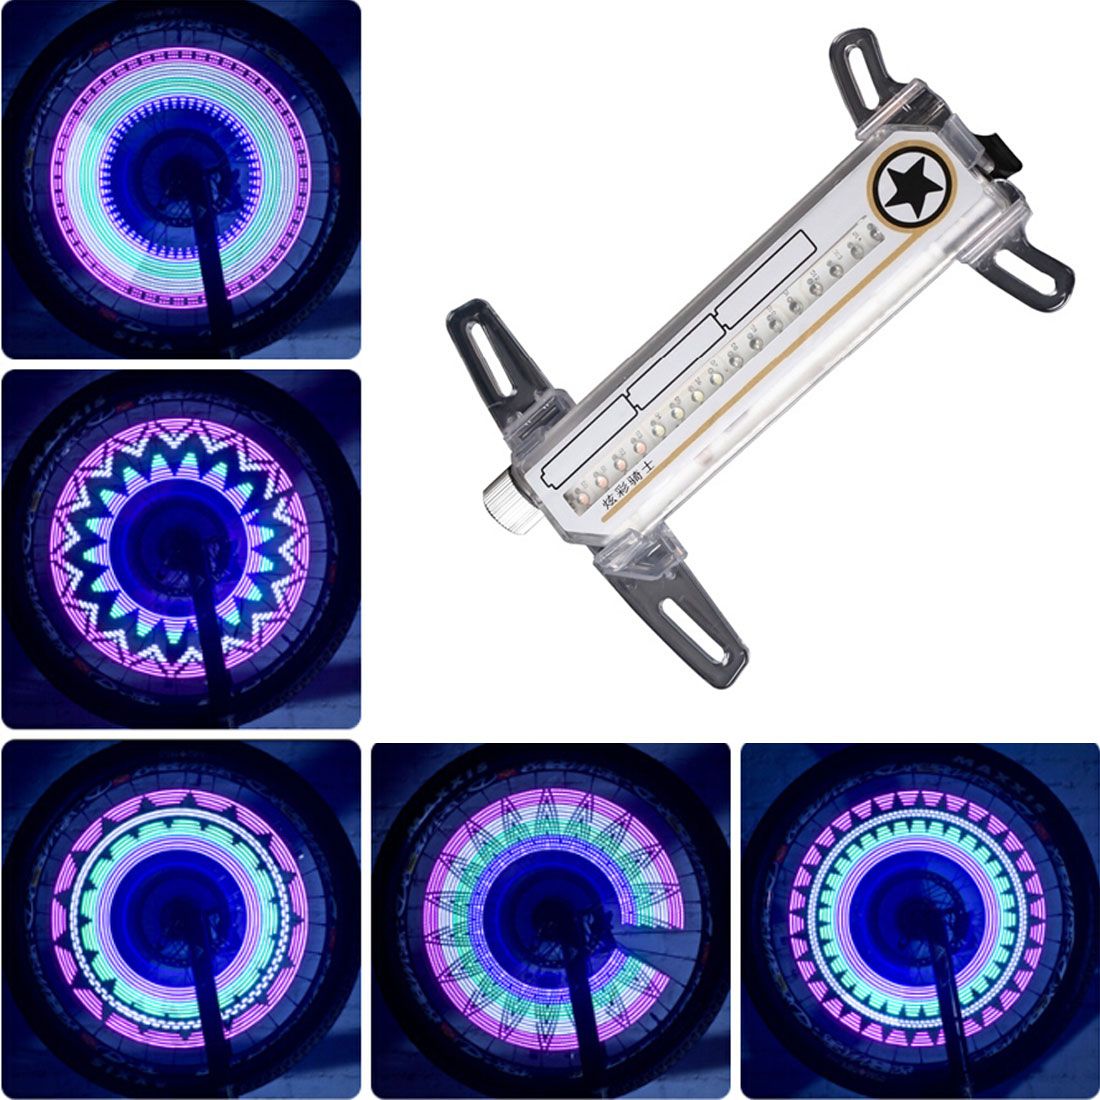 16 LED 32 Patterns DIY Bike/Cycling/Bicycle Wheel Light Hot Wheels BLL_609 UK 2019 From Hgml, UK ...